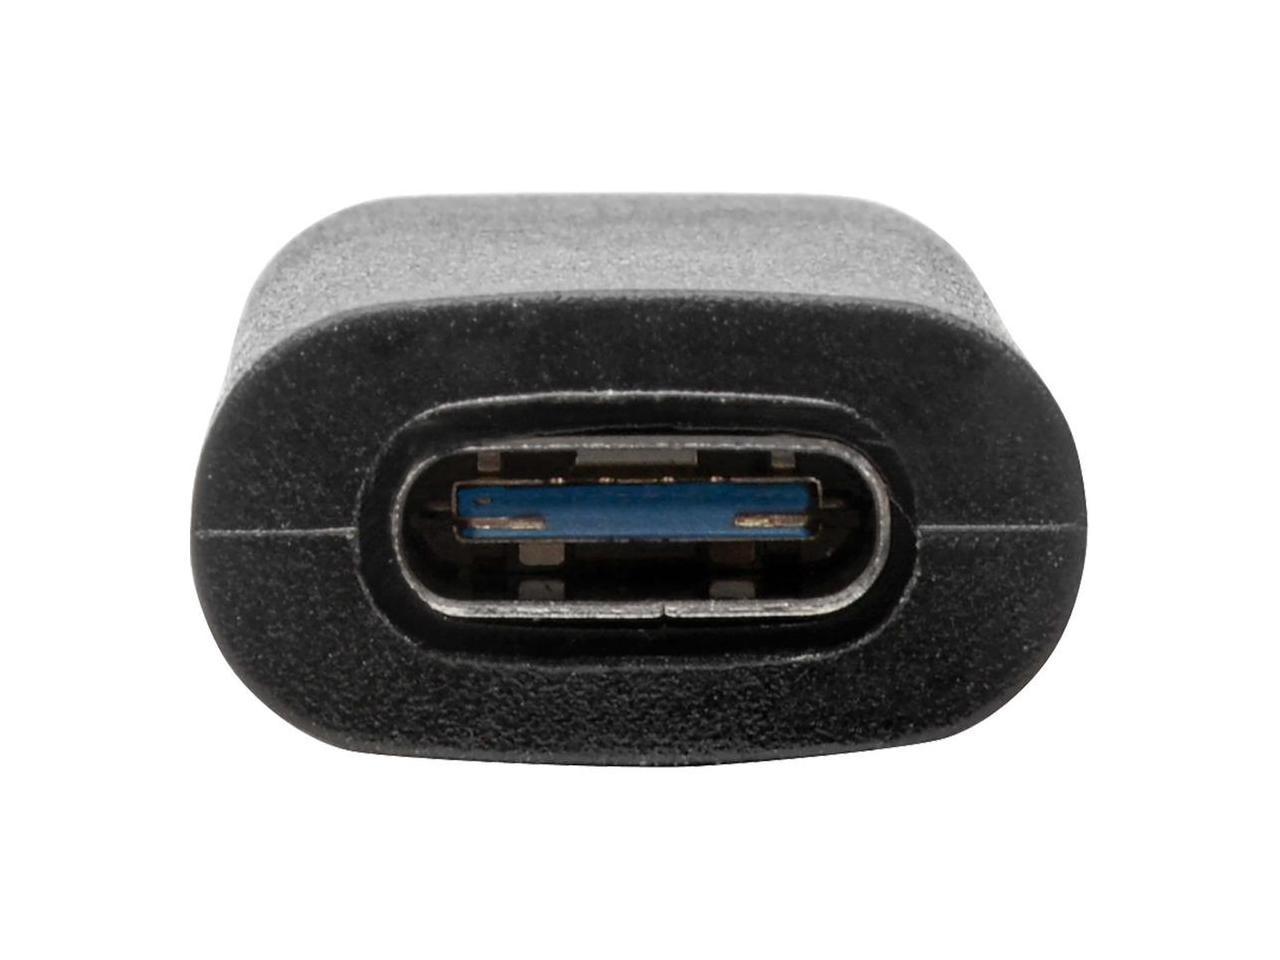 Tripp Lite USB 3.0 Adapter Converter USB-C to USB-A U329-000-10G - image 2 of 5